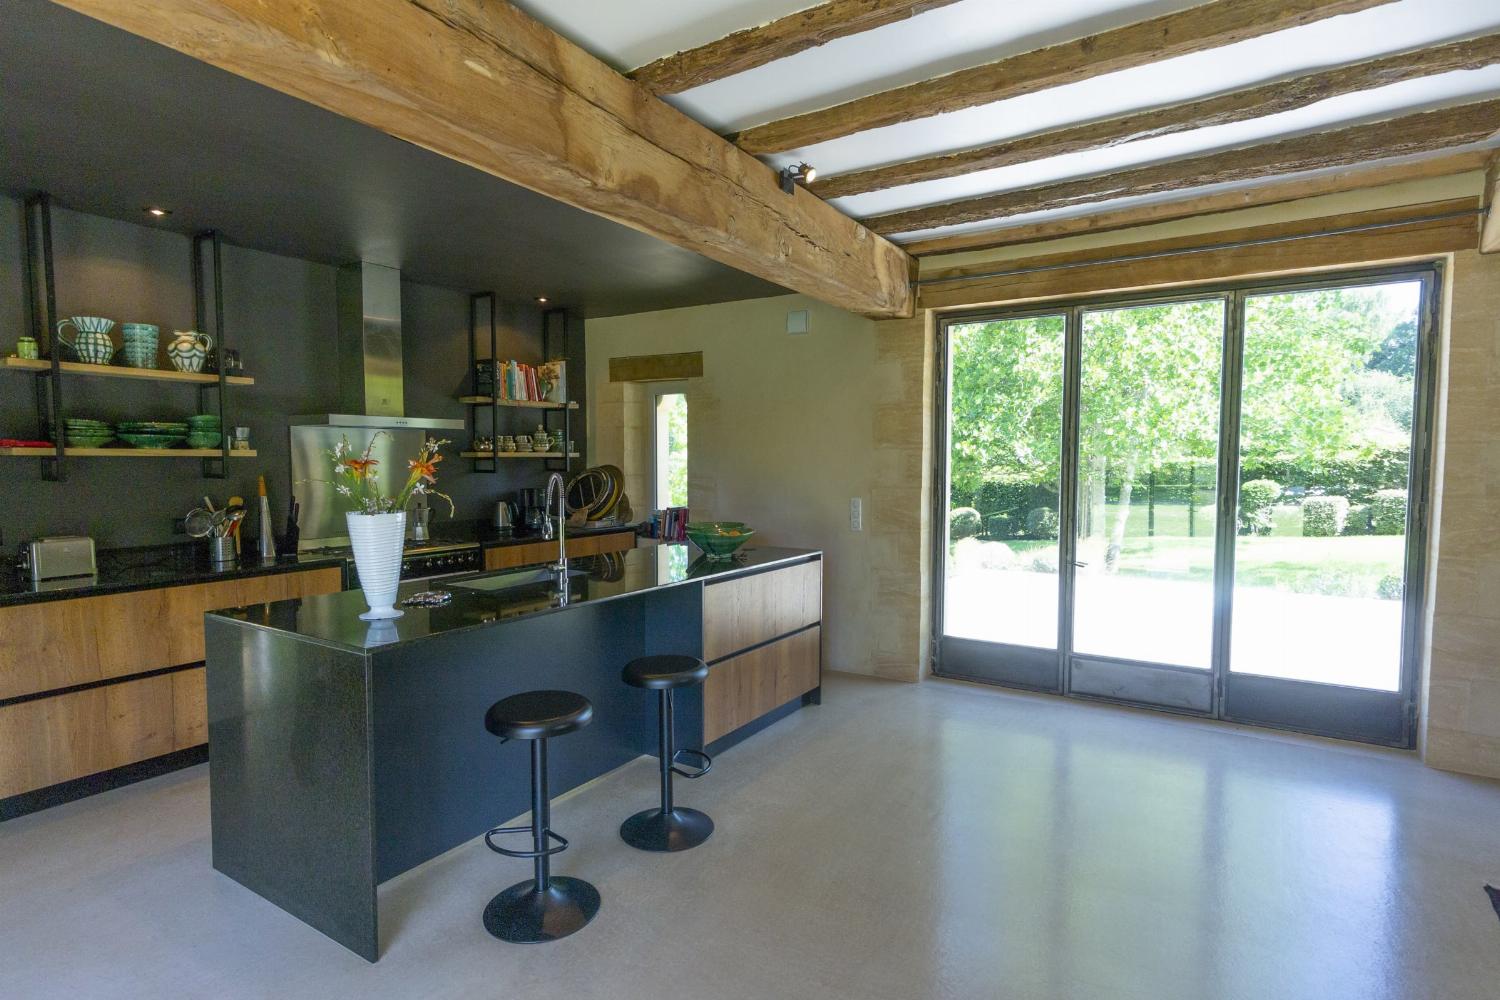 Kitchen | Holiday home in Dordogne